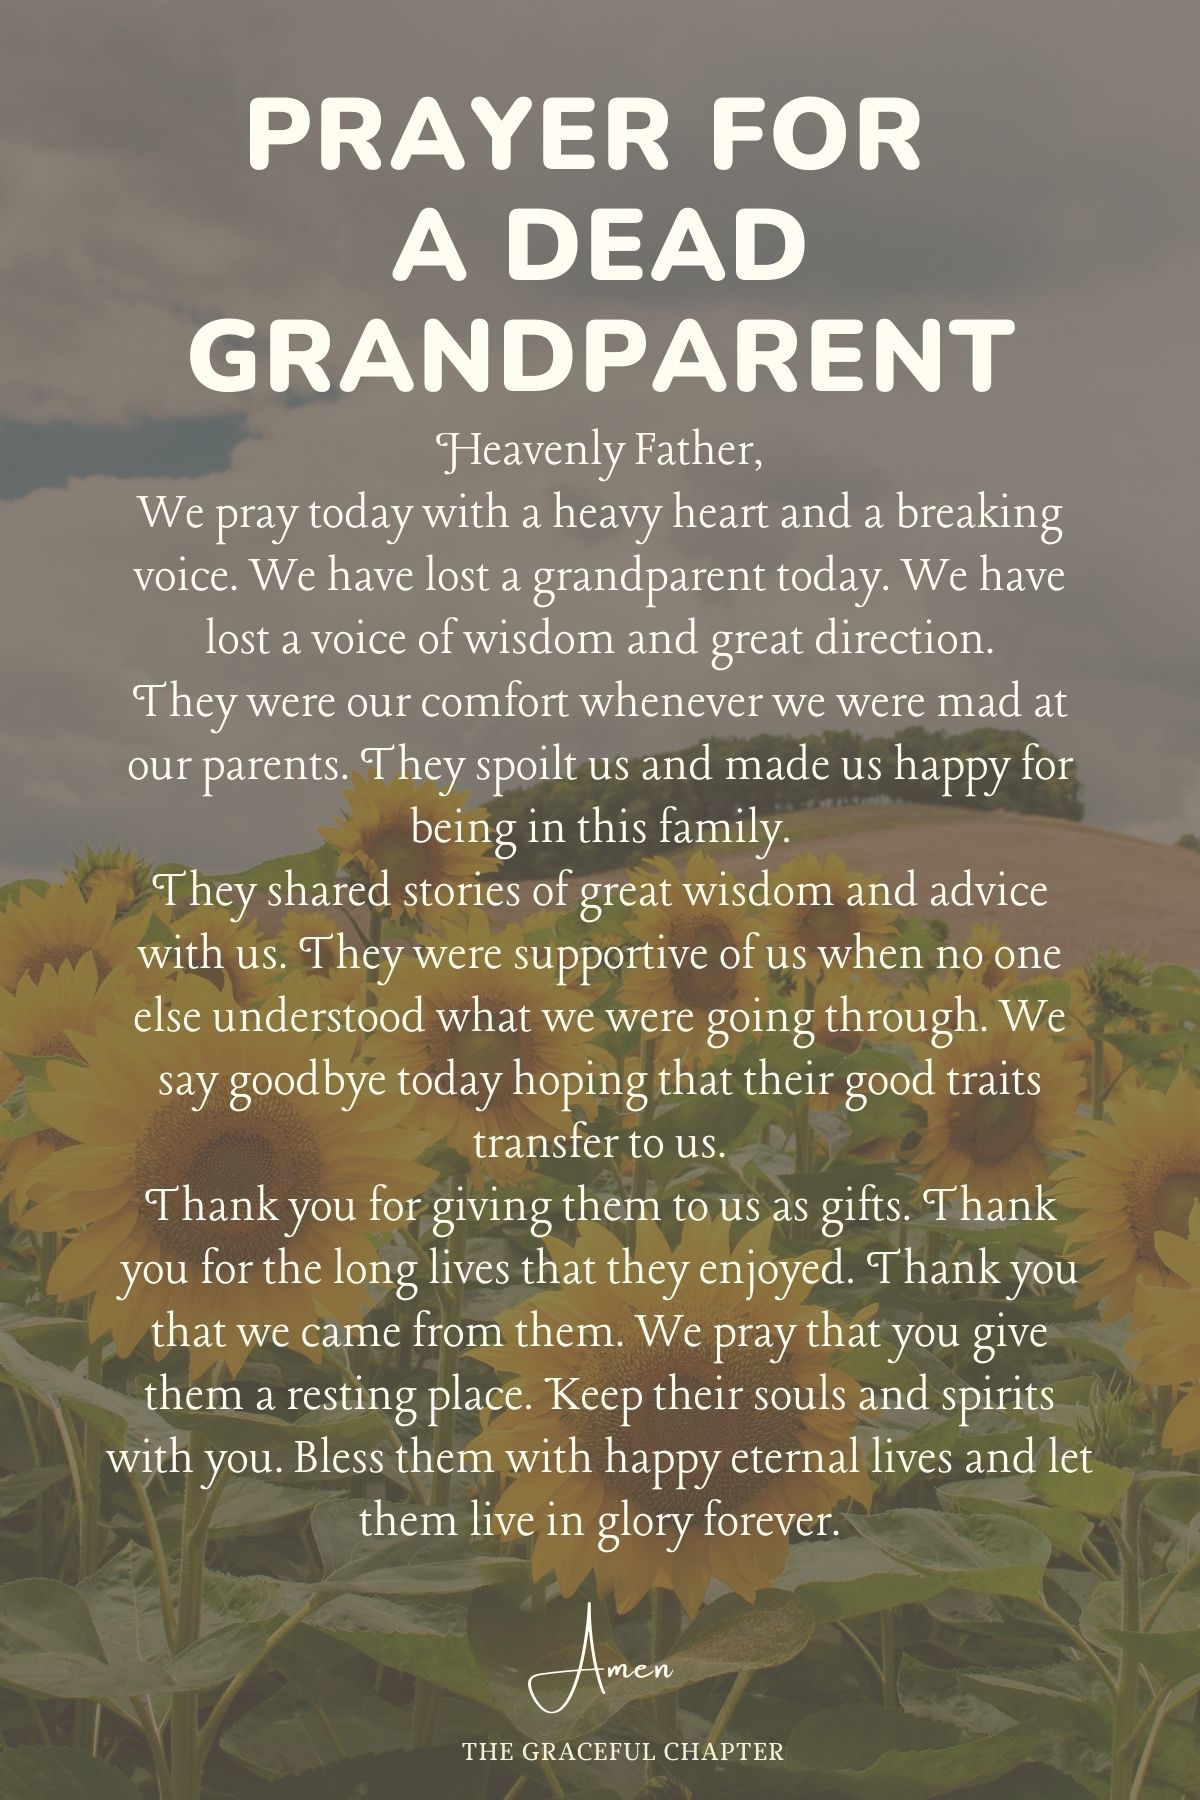 Prayer for a dead grandparent